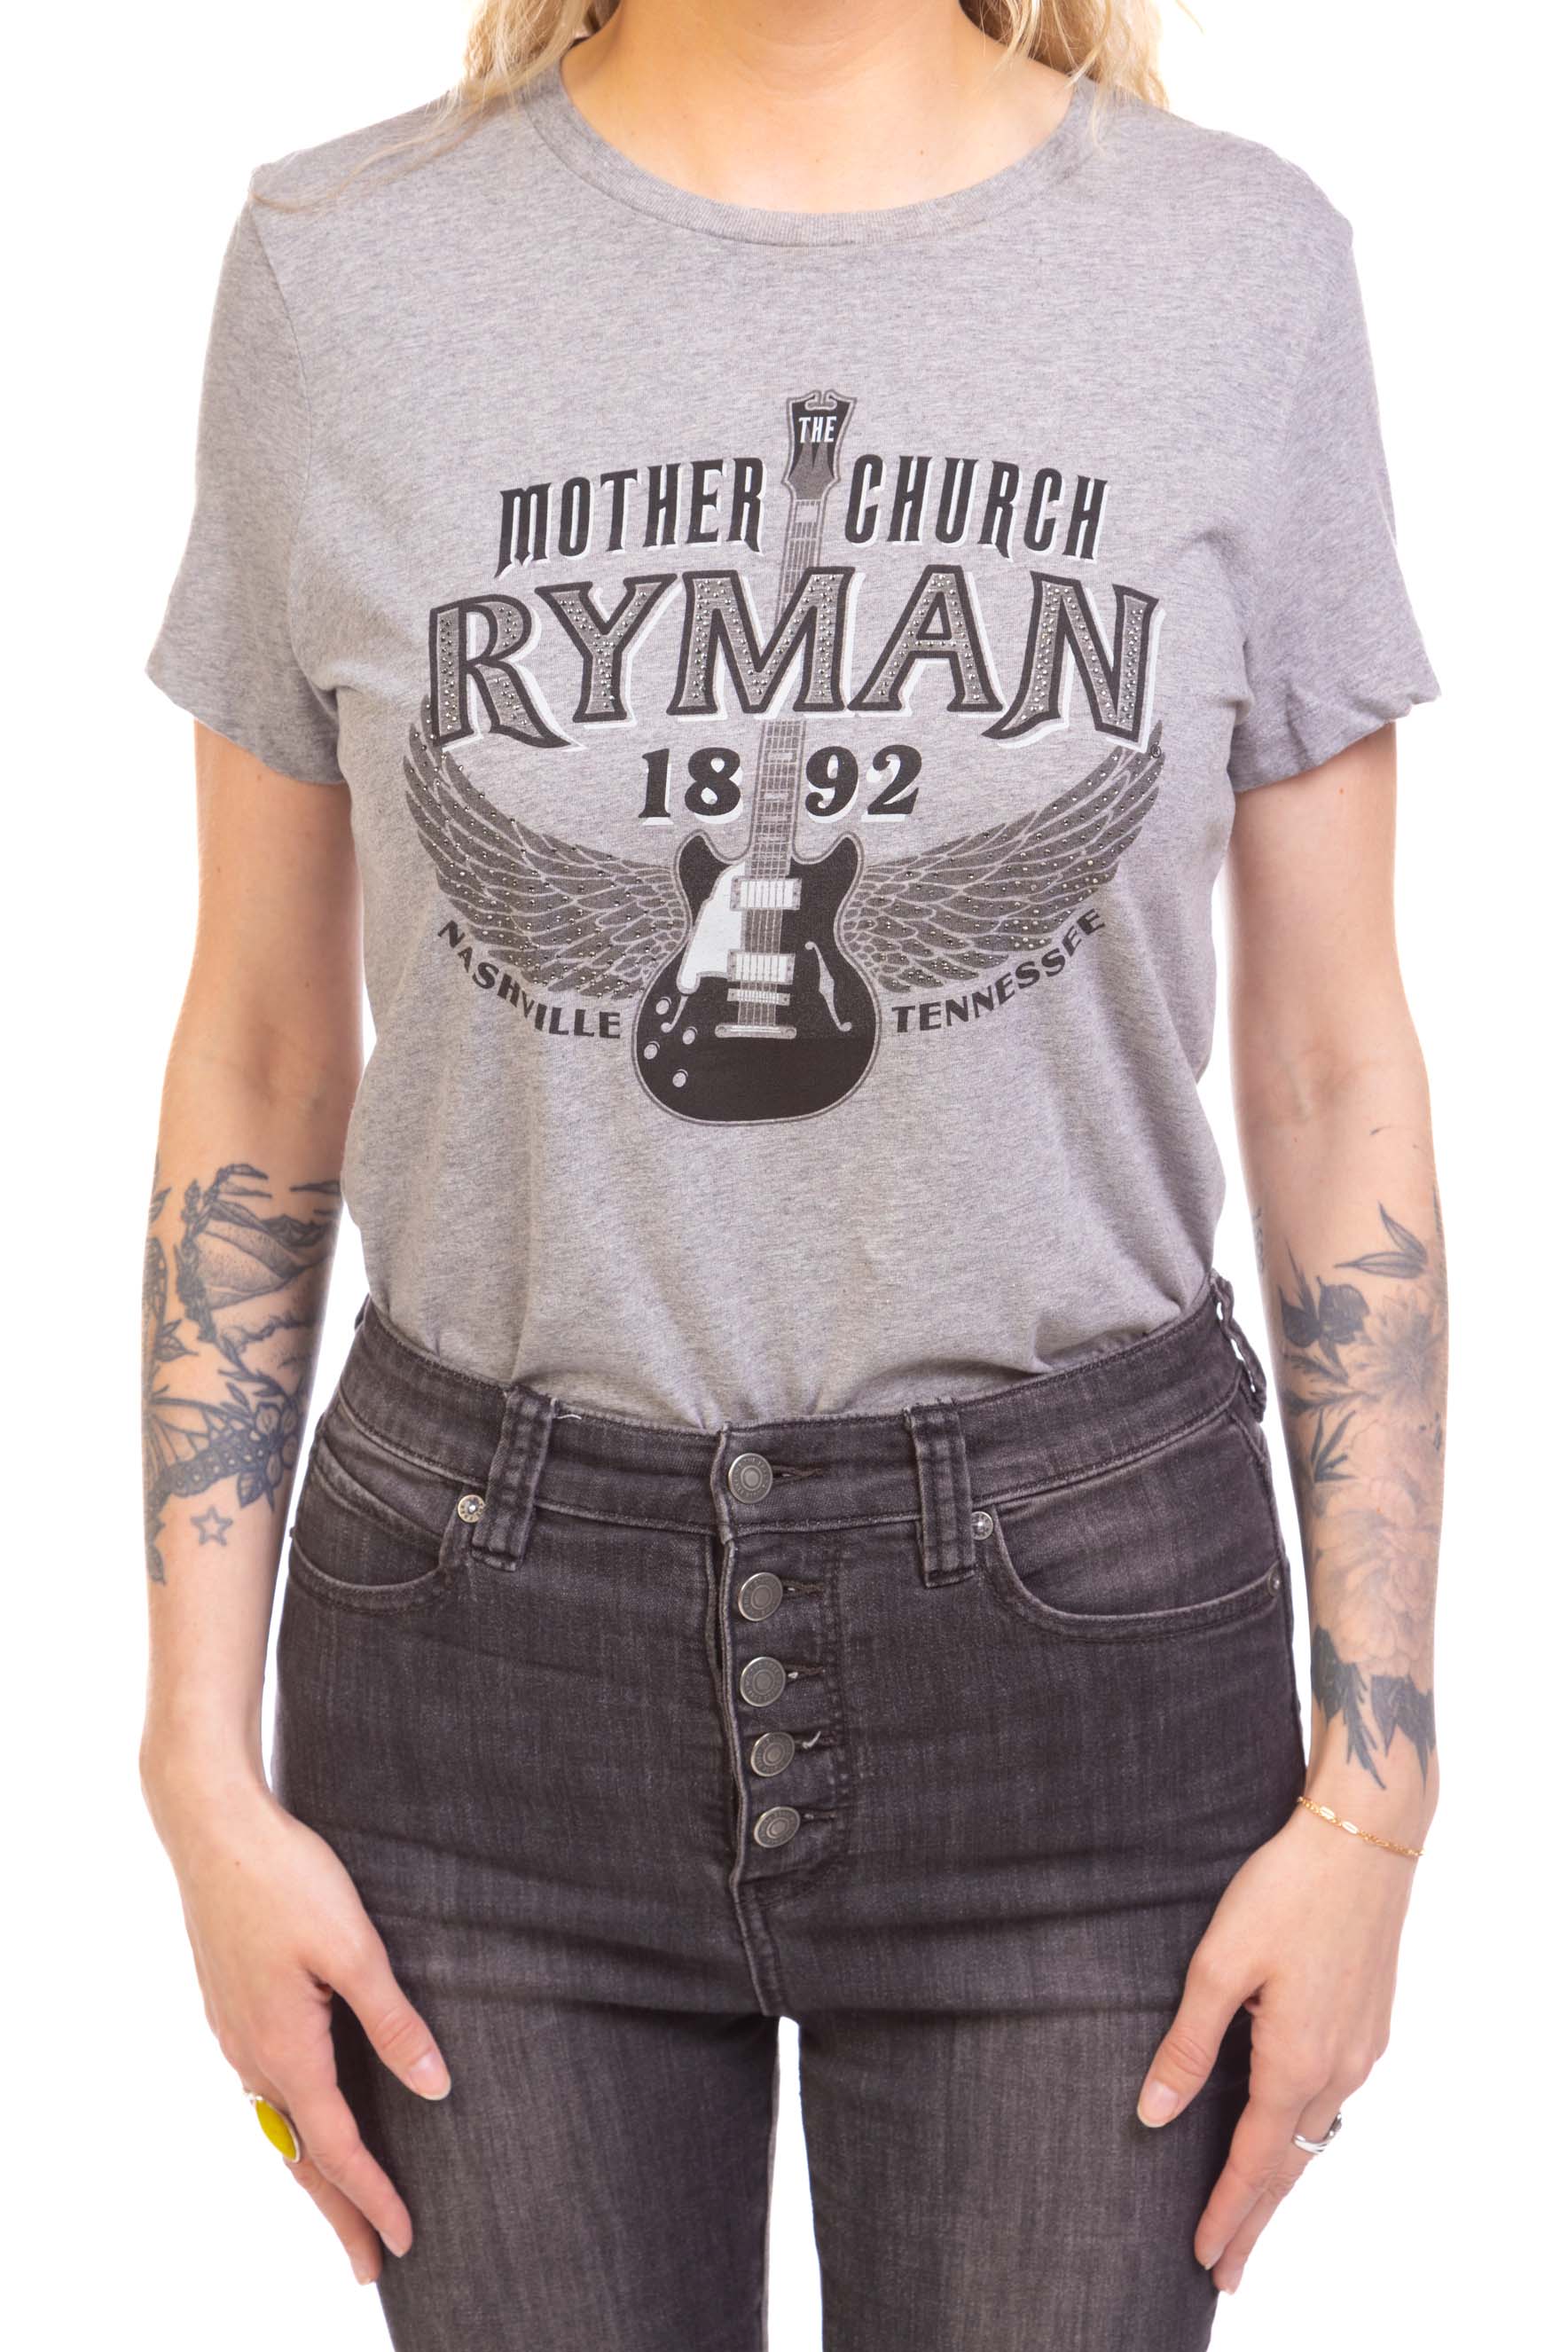 Ryman Outlaw Glitter Wings T-Shirt